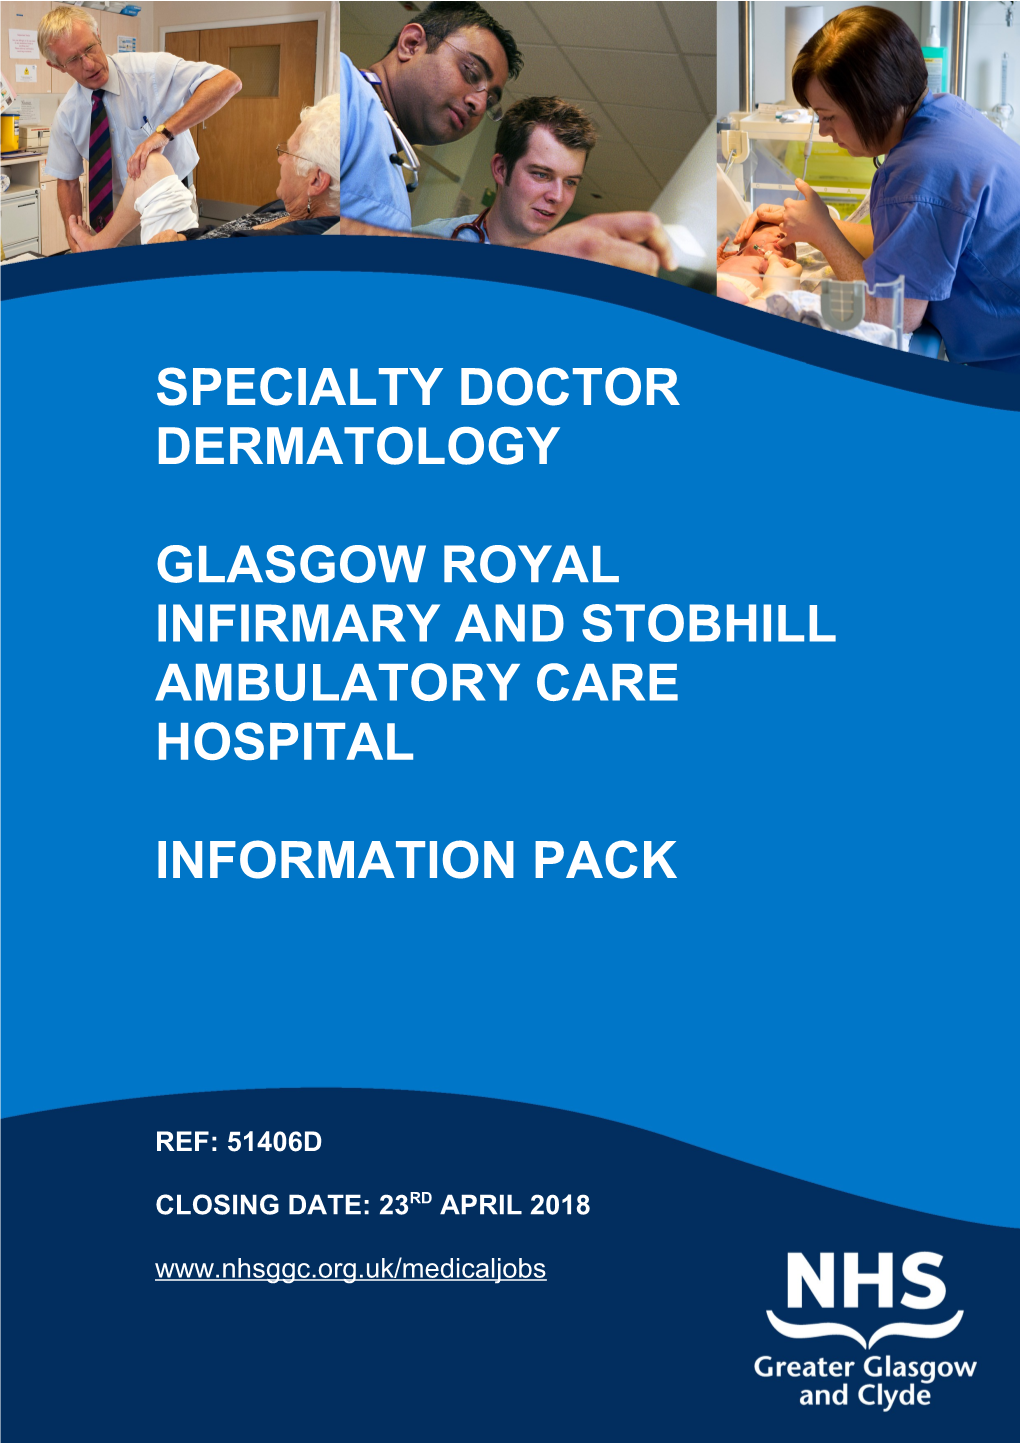 Glasgow Royal Infirmary and Stobhill Ambulatory Care Hospital